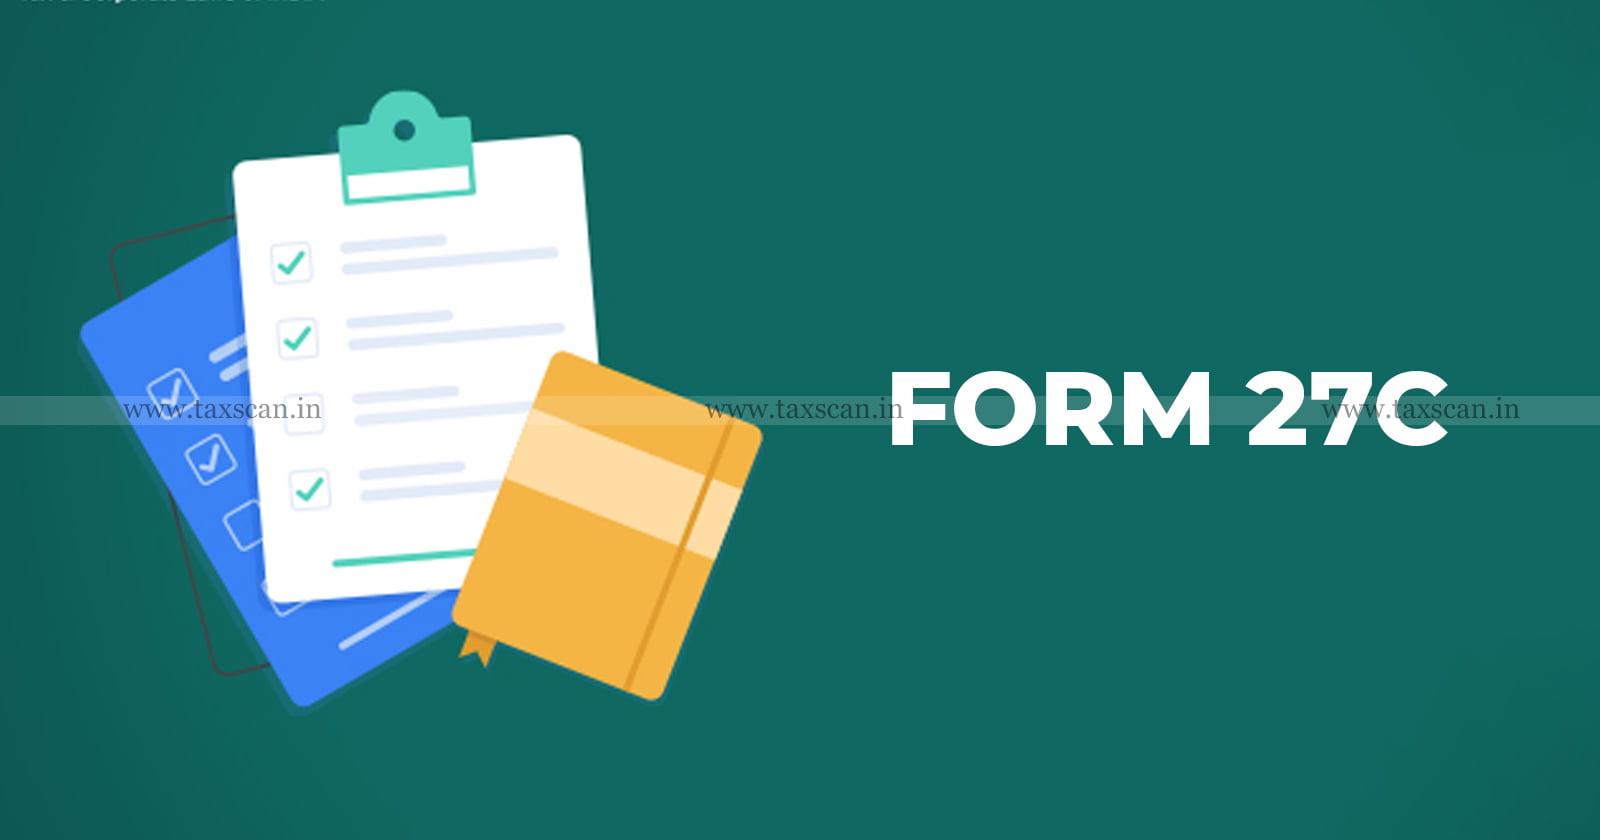 Income Tax Dept - FAQ for Form 27C -Form 27C- FAQ - Income Tax Dept releases FAQ - taxscan